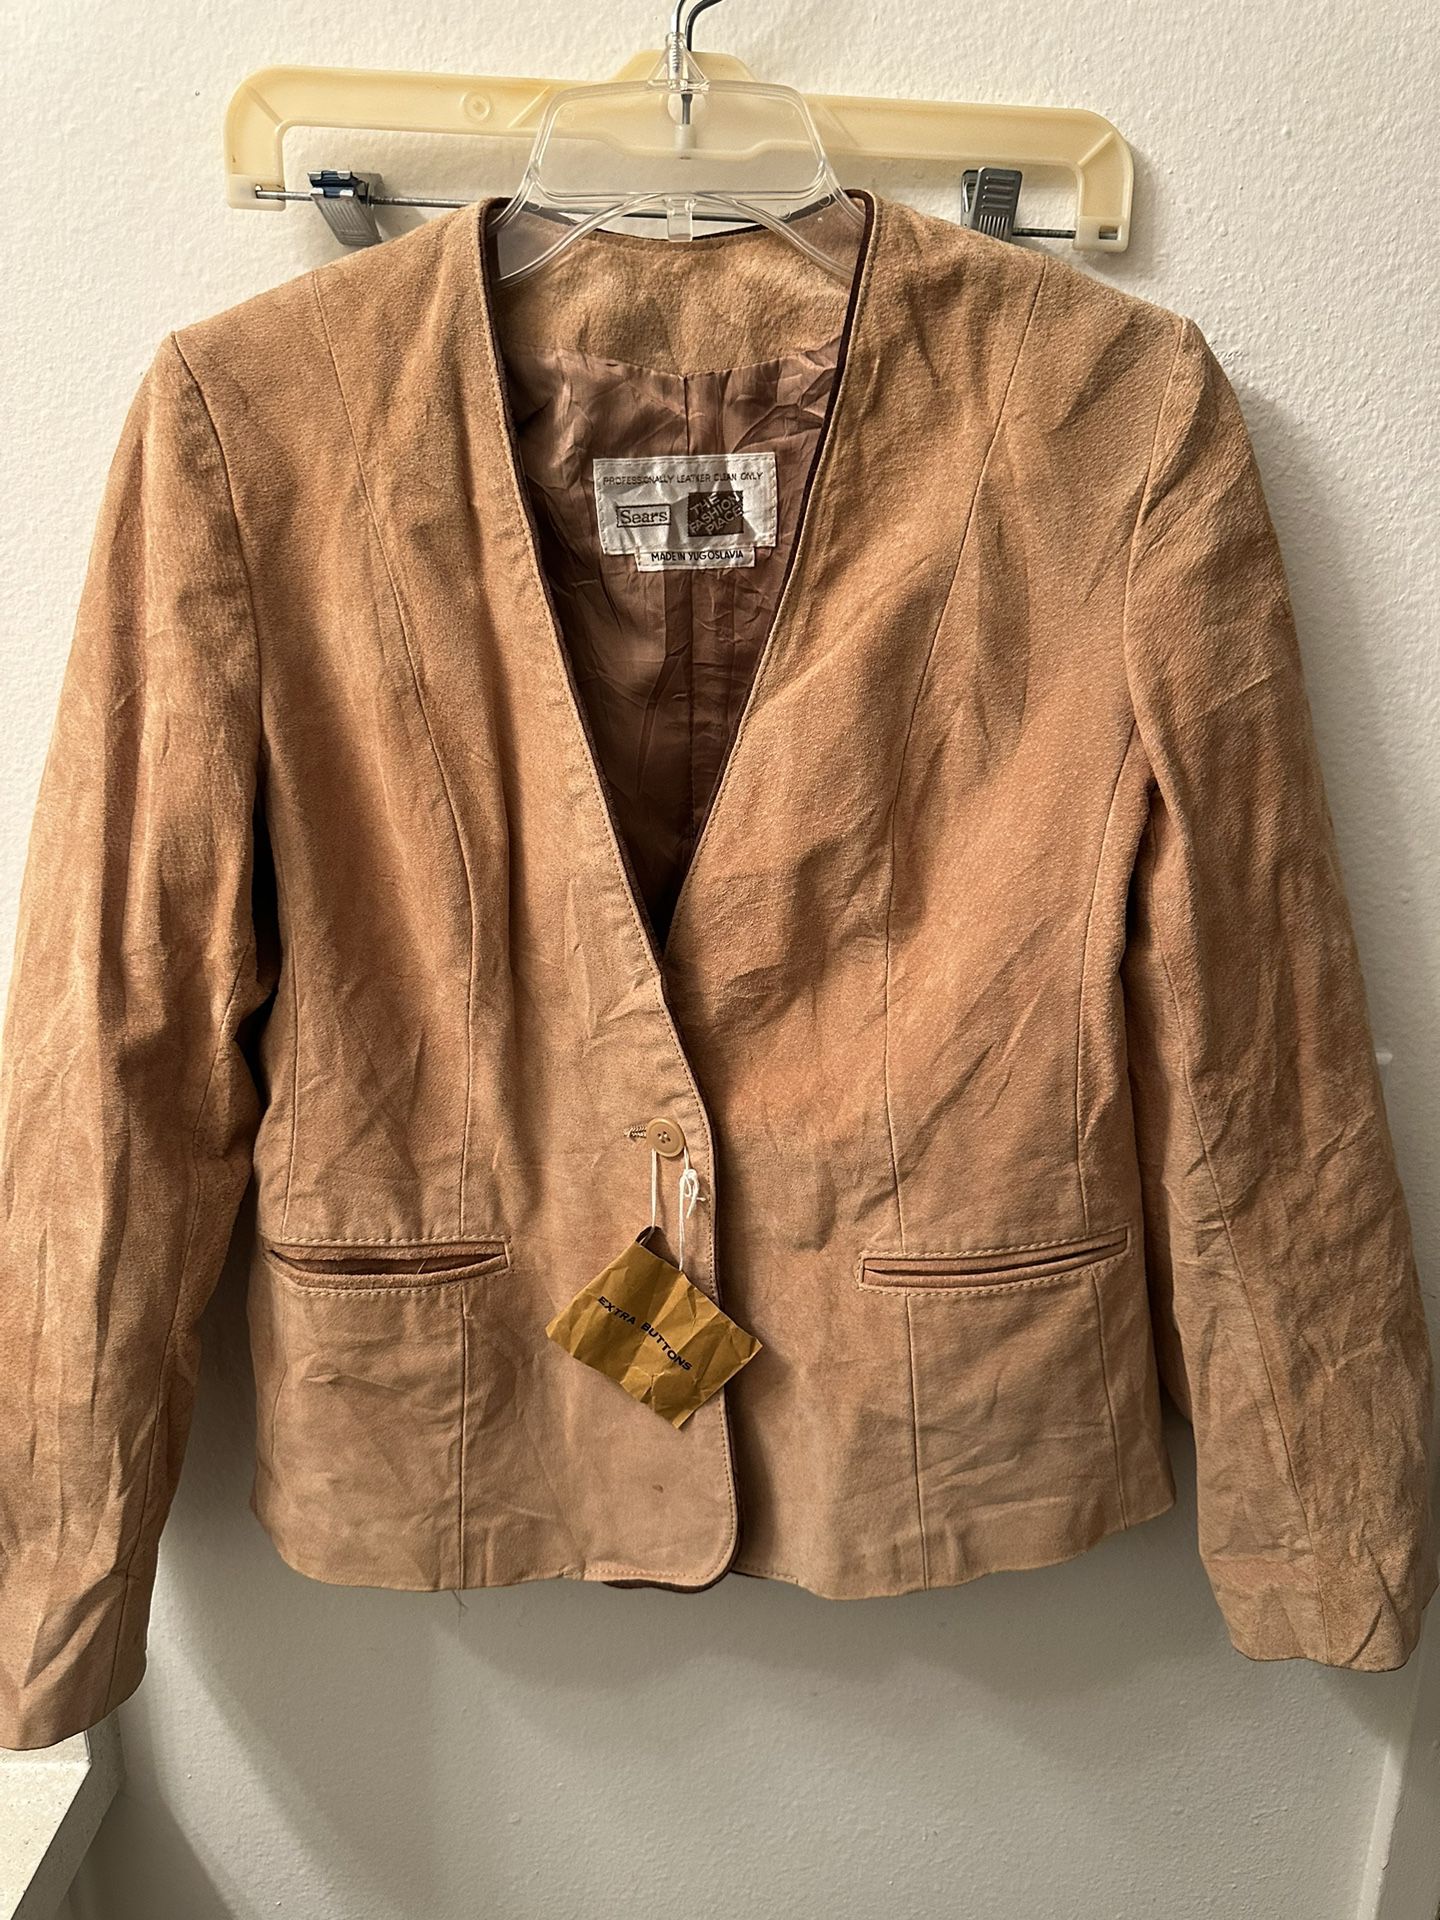 Vintage Sears Leather Jacket Size S